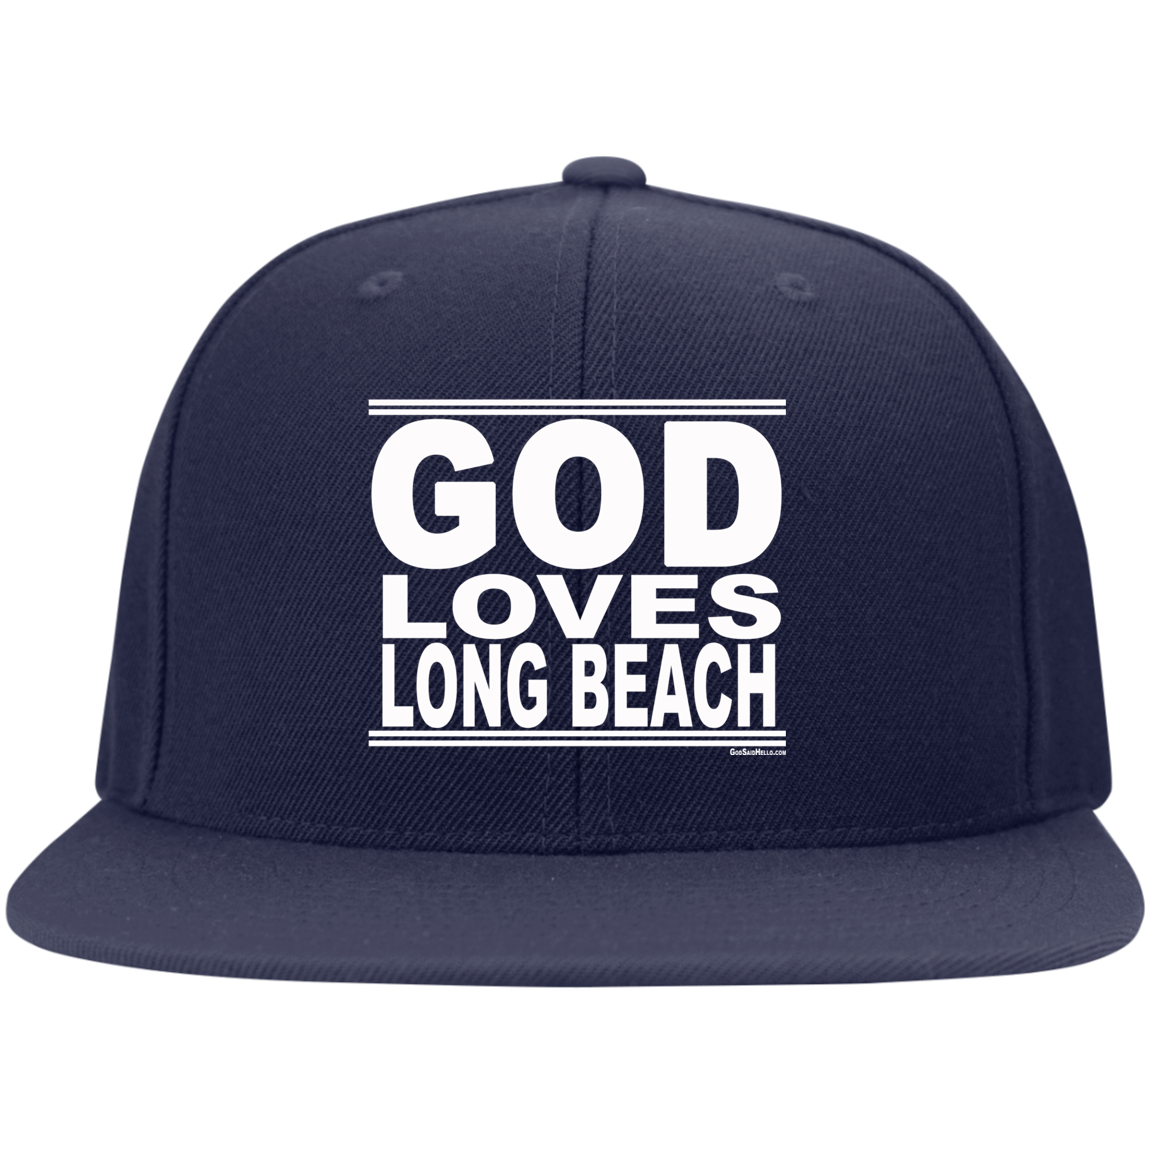 #GodLovesLongBeach - Snapback Hat